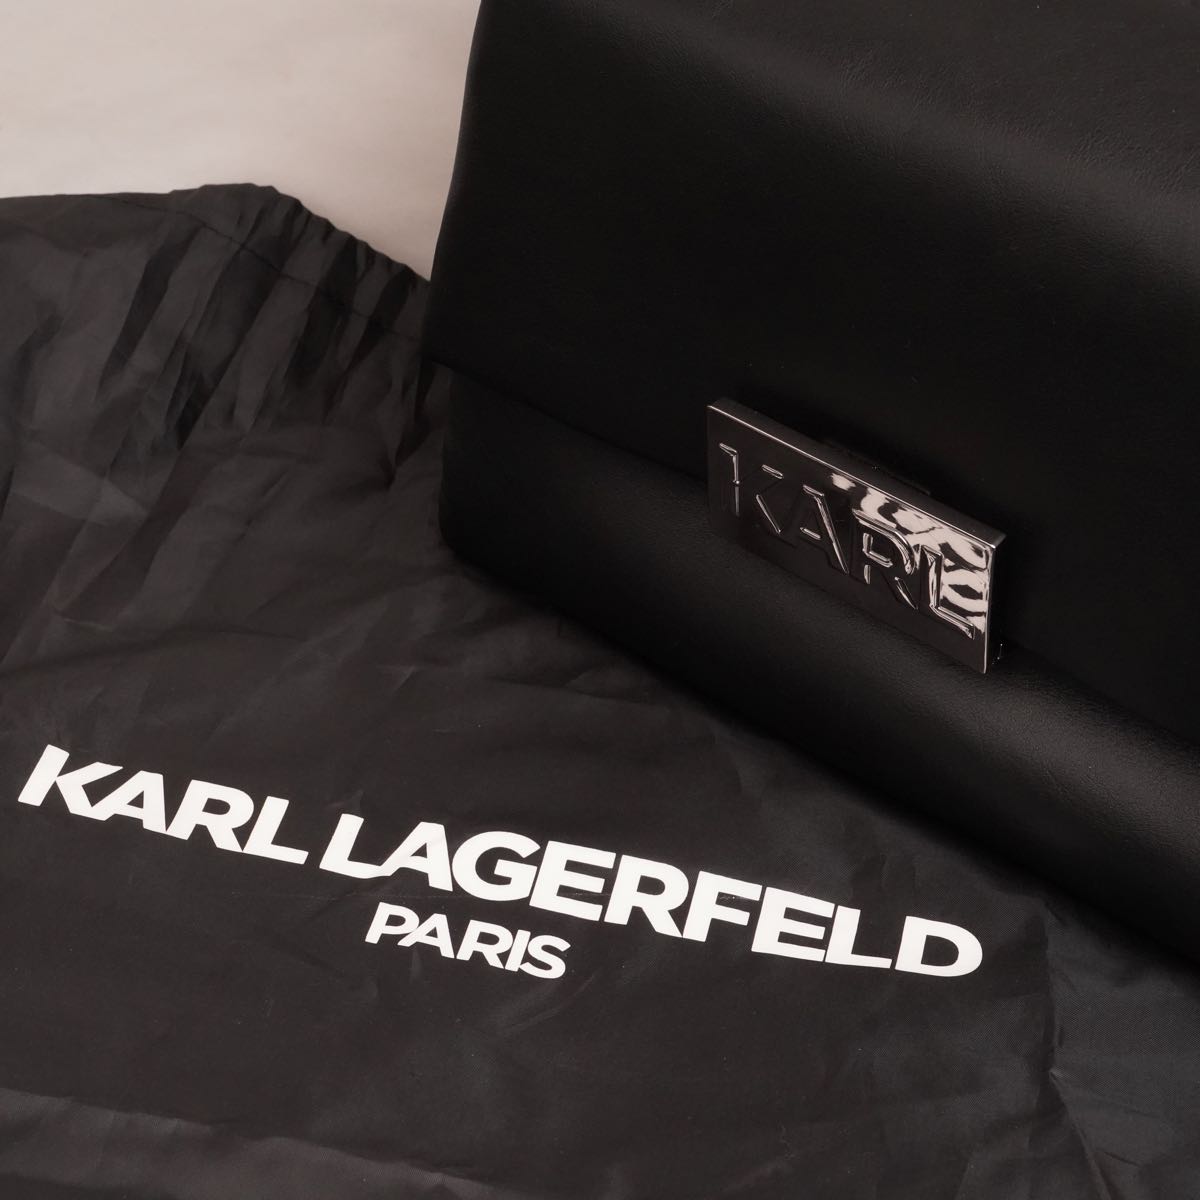 KARL LAGERFELD PARIS カールラガーフェルド ブラック レザーバッグ BLACK LEATHER BAG